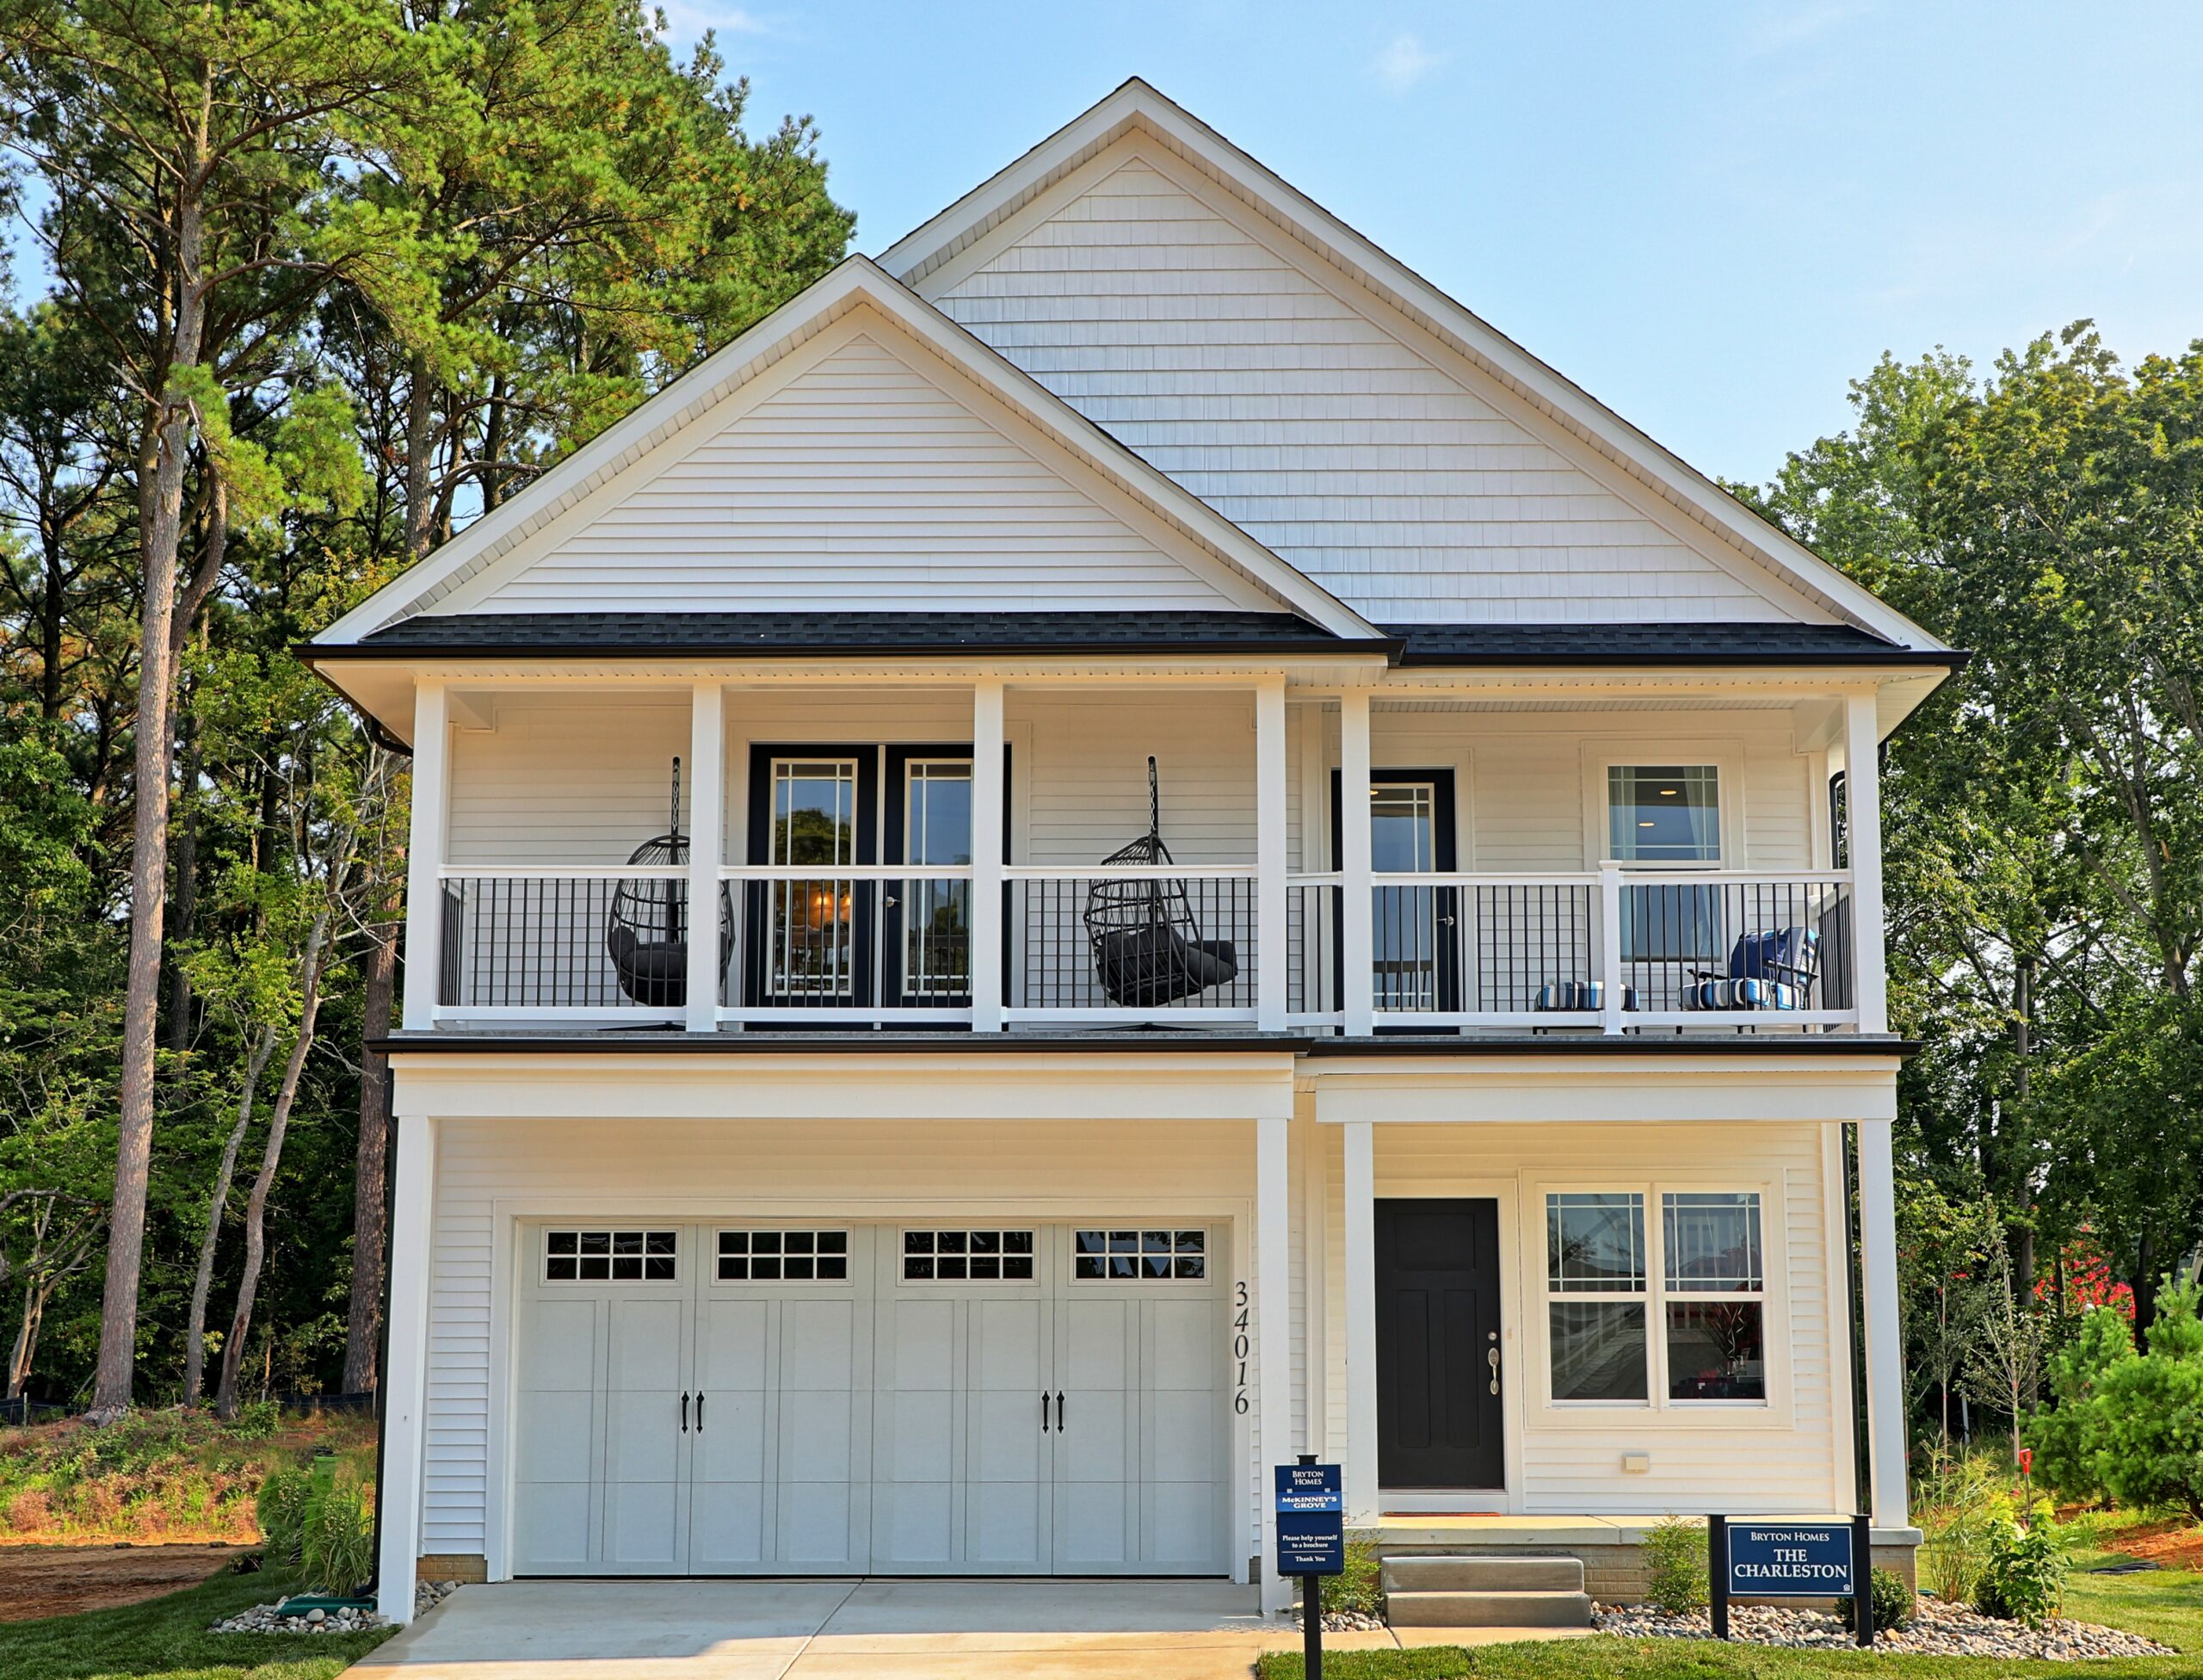 The Charleston Home Model by Bryton Homes